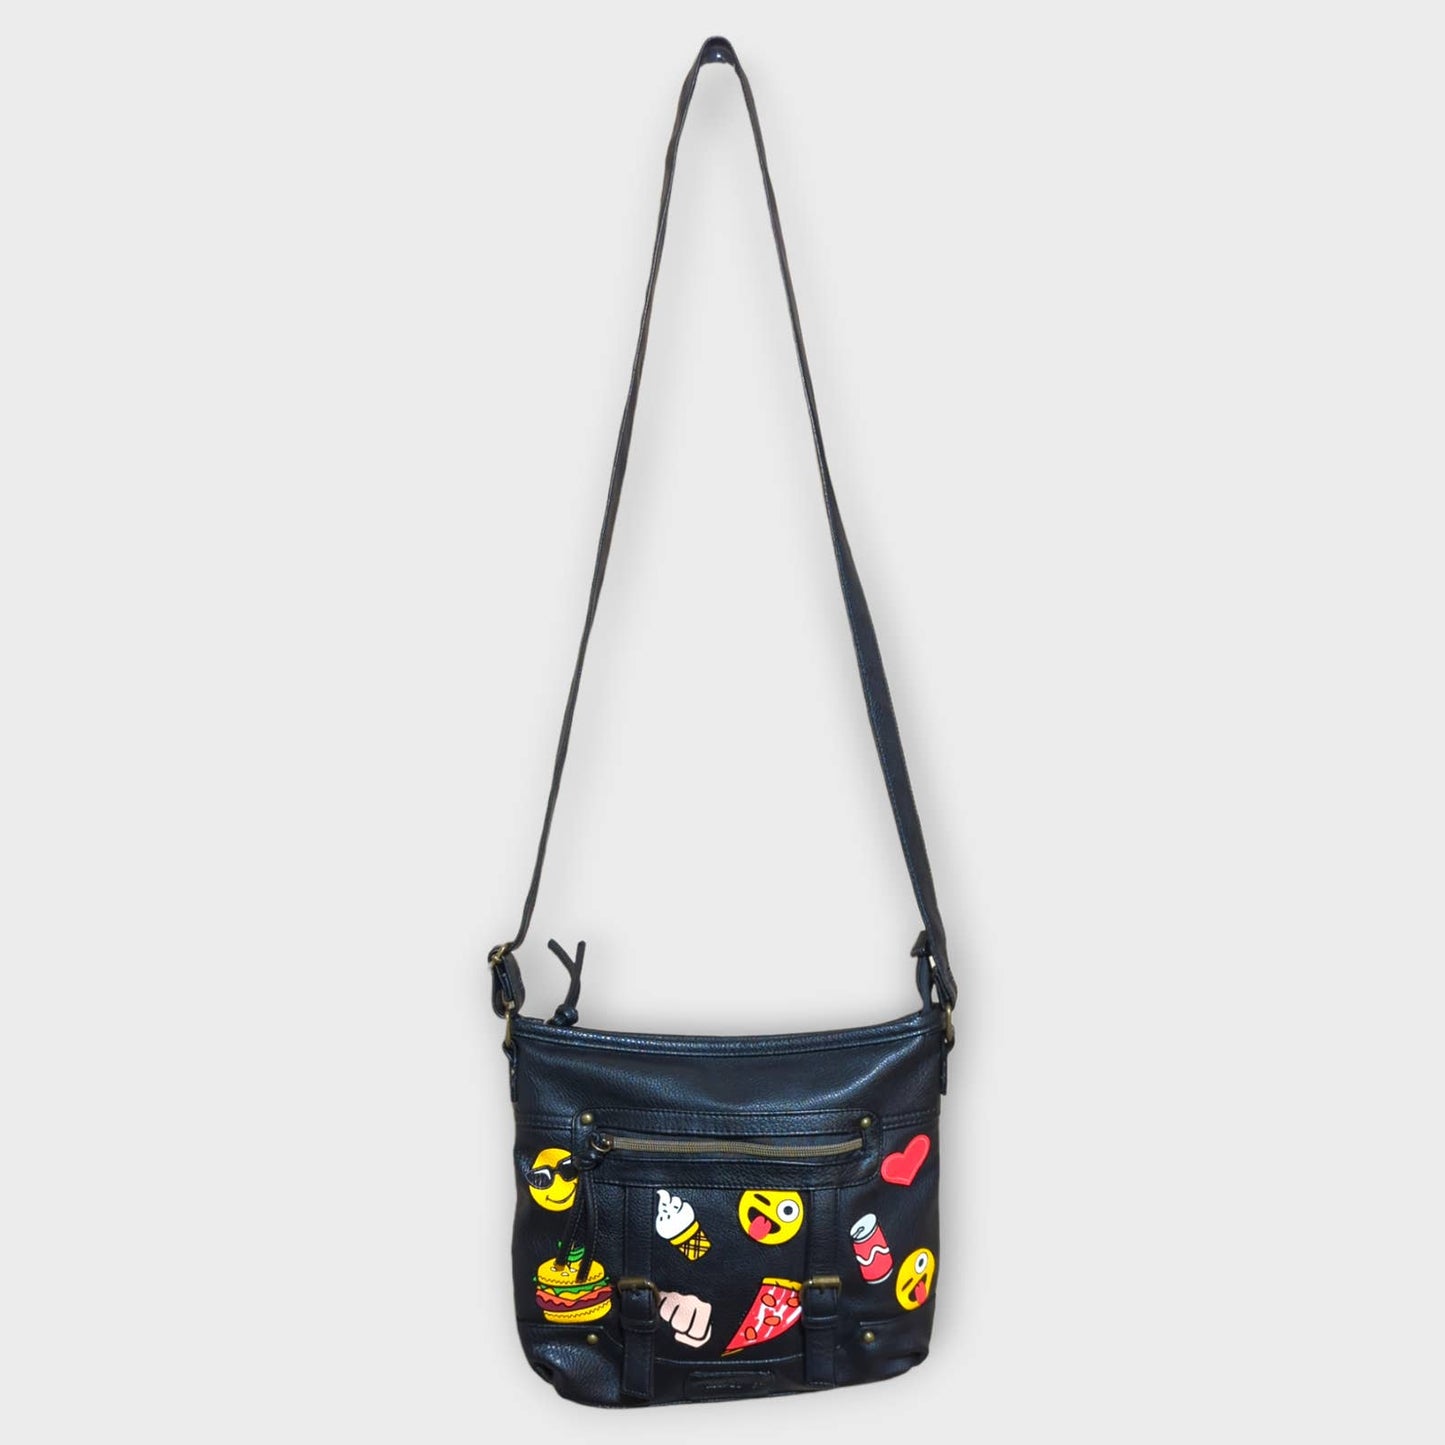 WALLFLOWER Black Emoji Adjustable Crossbody Purse Handbag NWOT